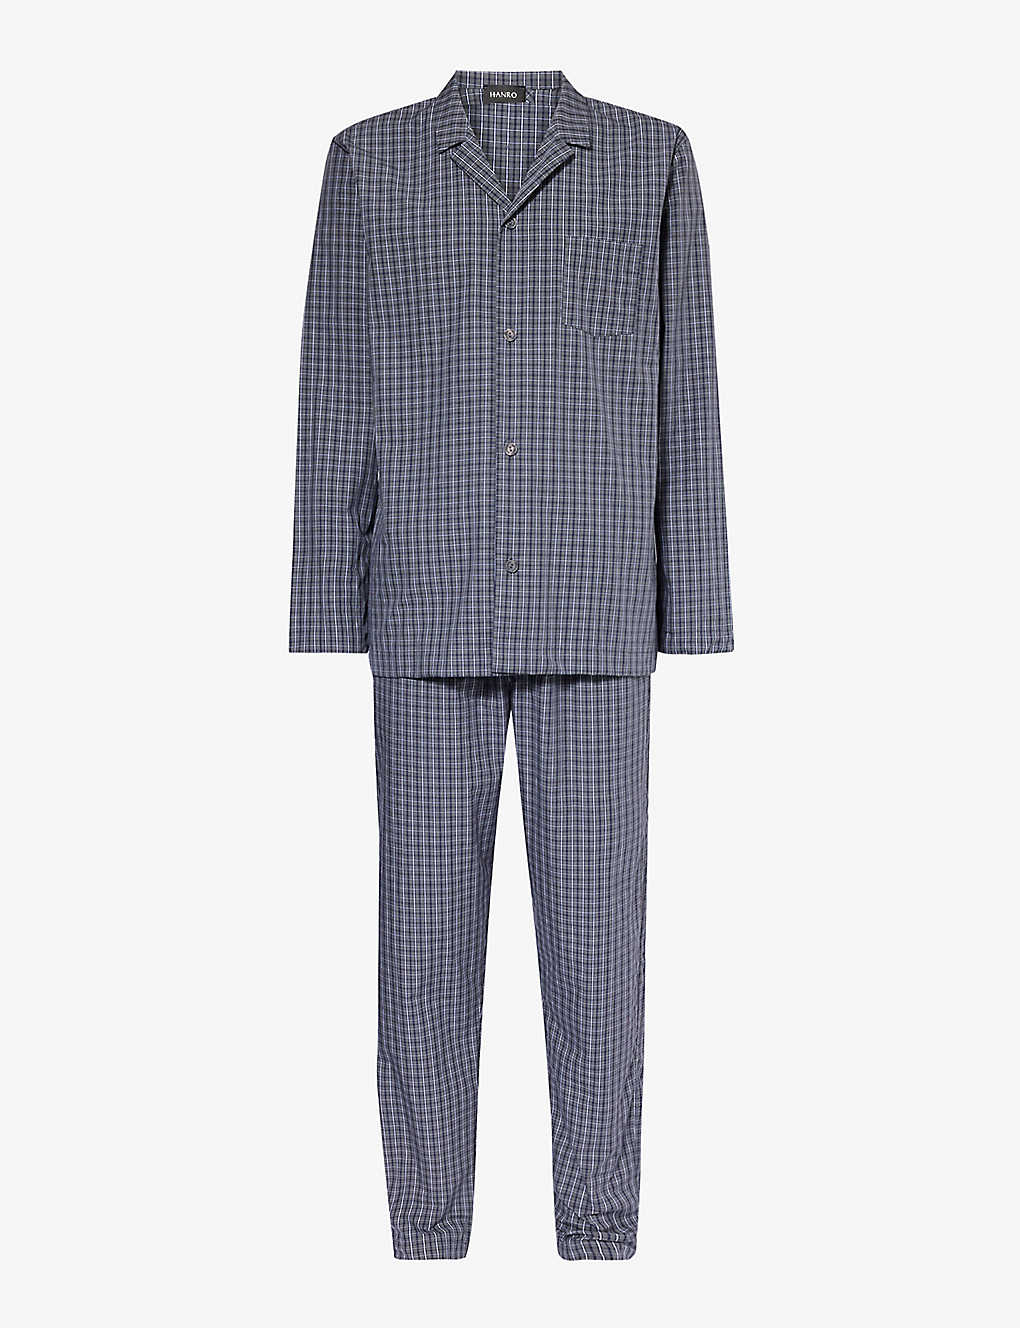 Hanro Mens Casual Check Checked Cotton Pyjama Set